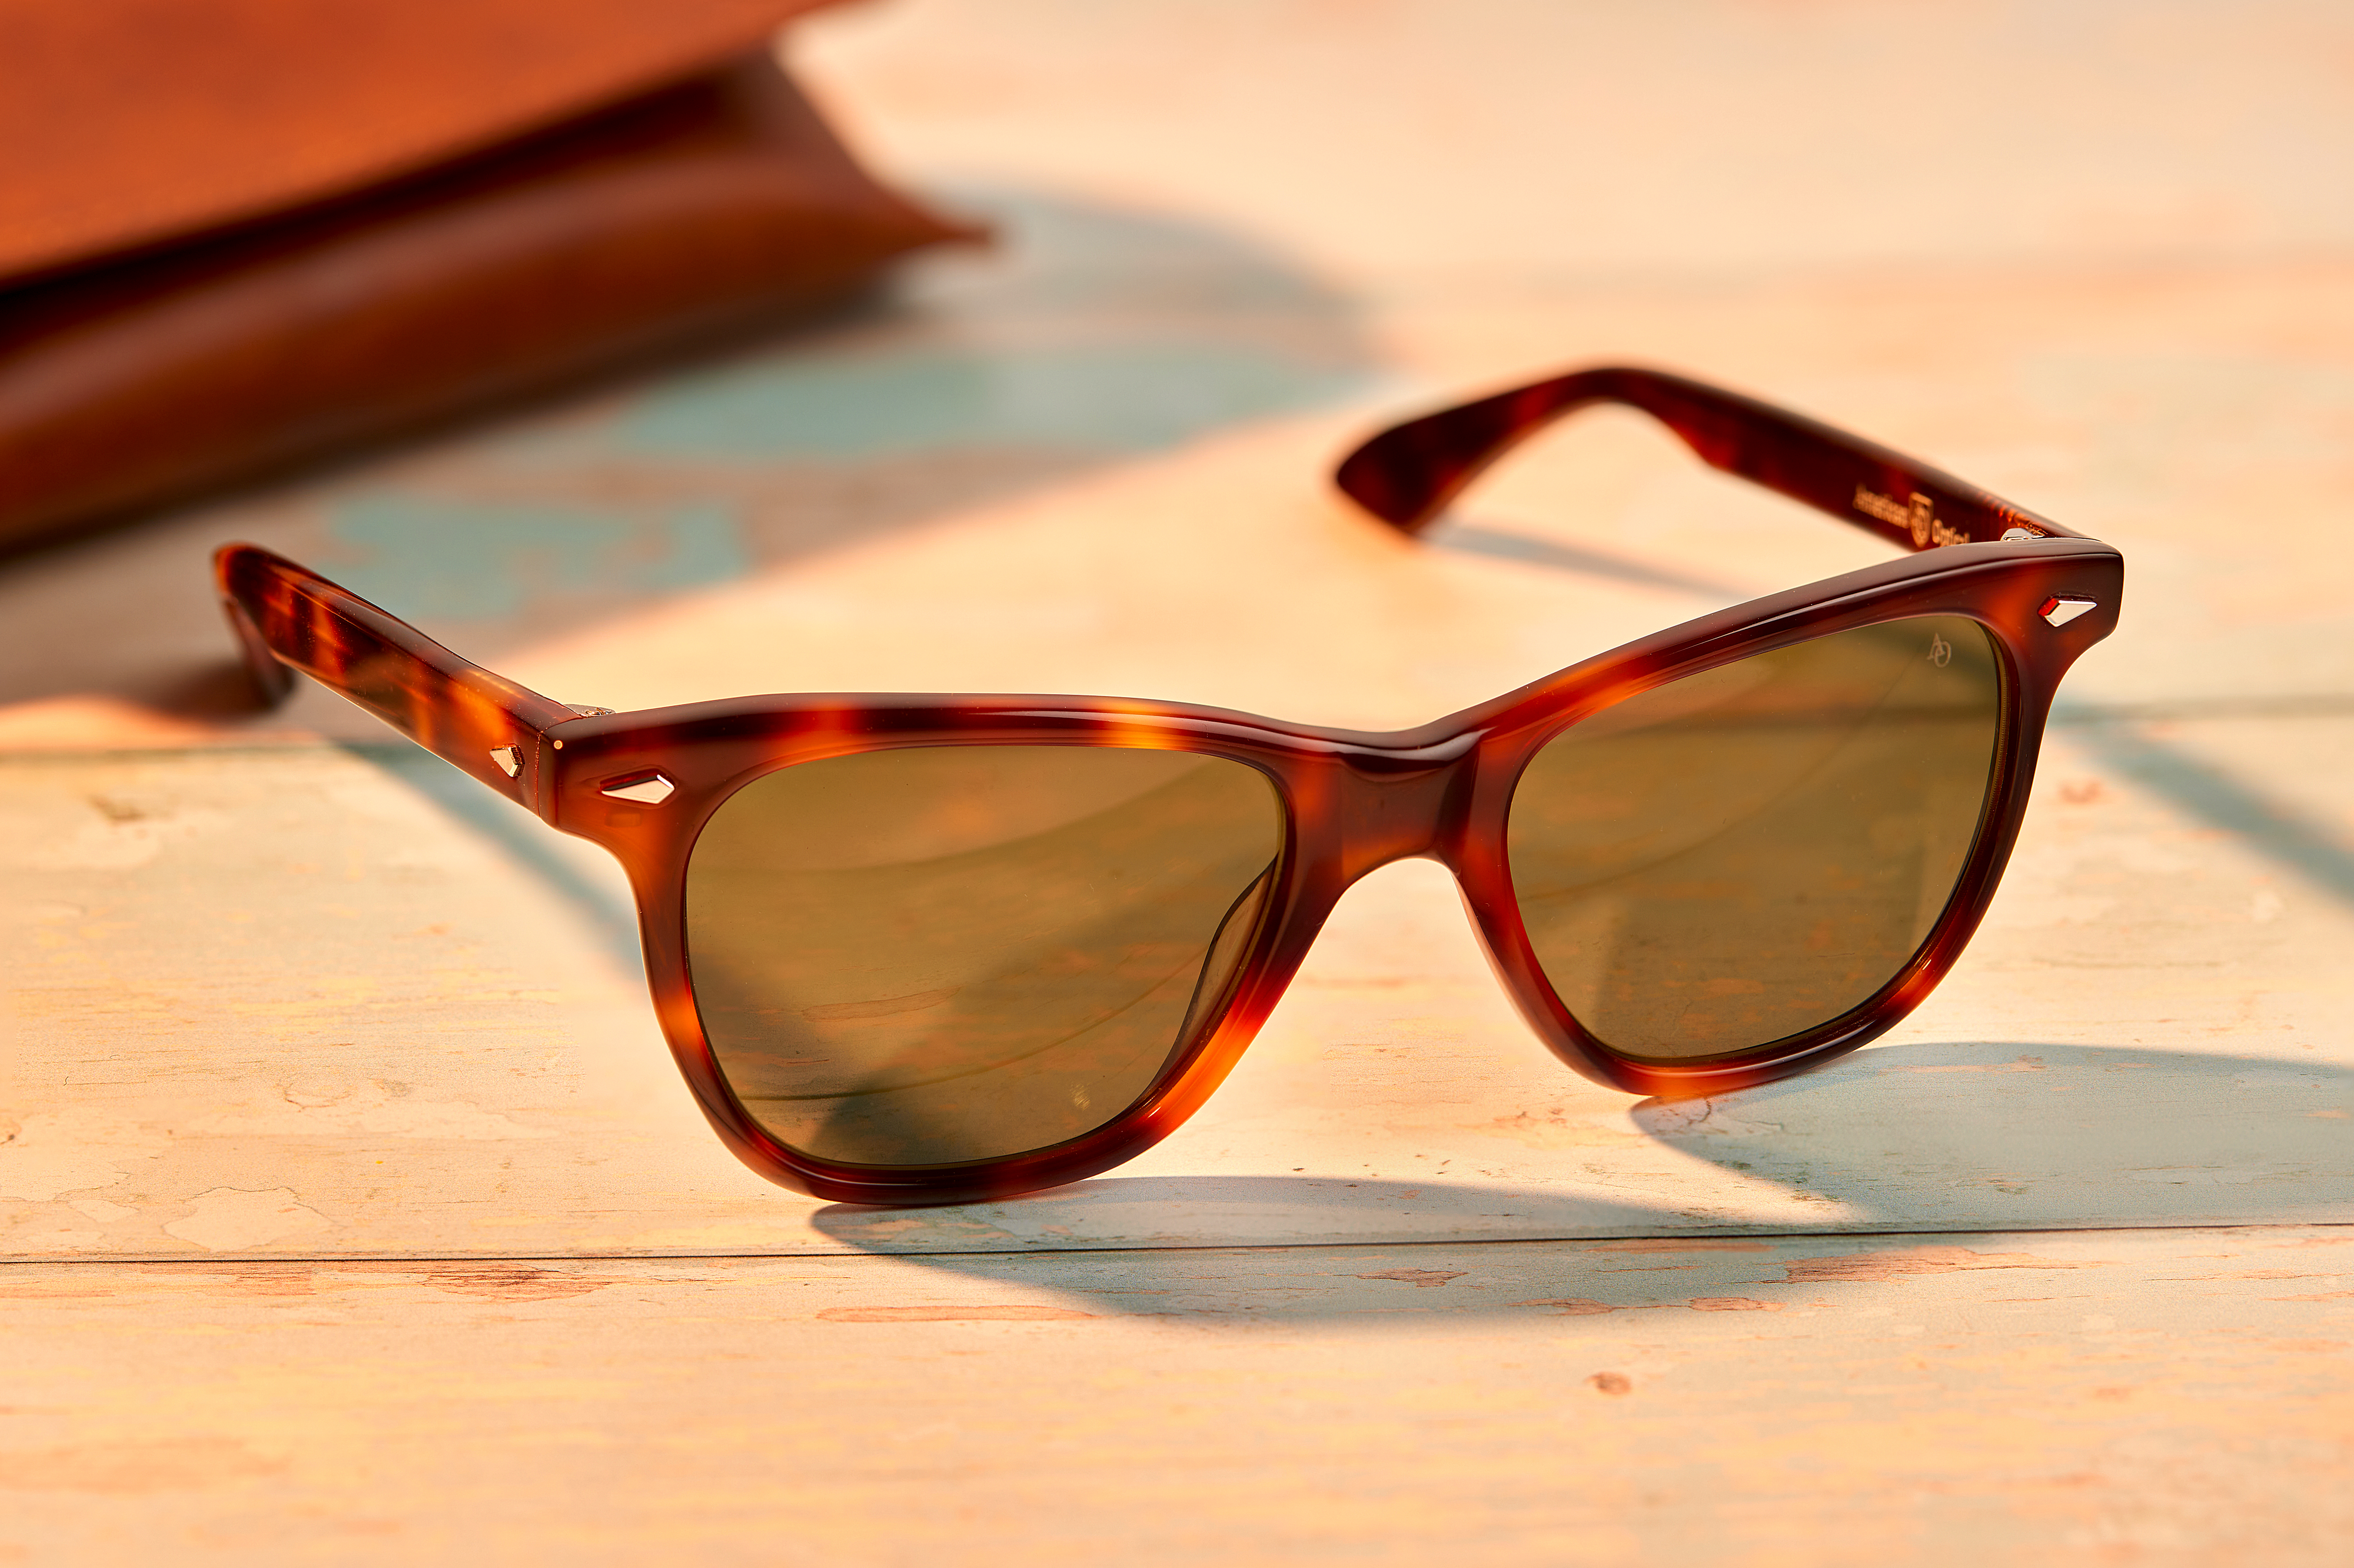 JFK Saratoga Sunglasses Polarized